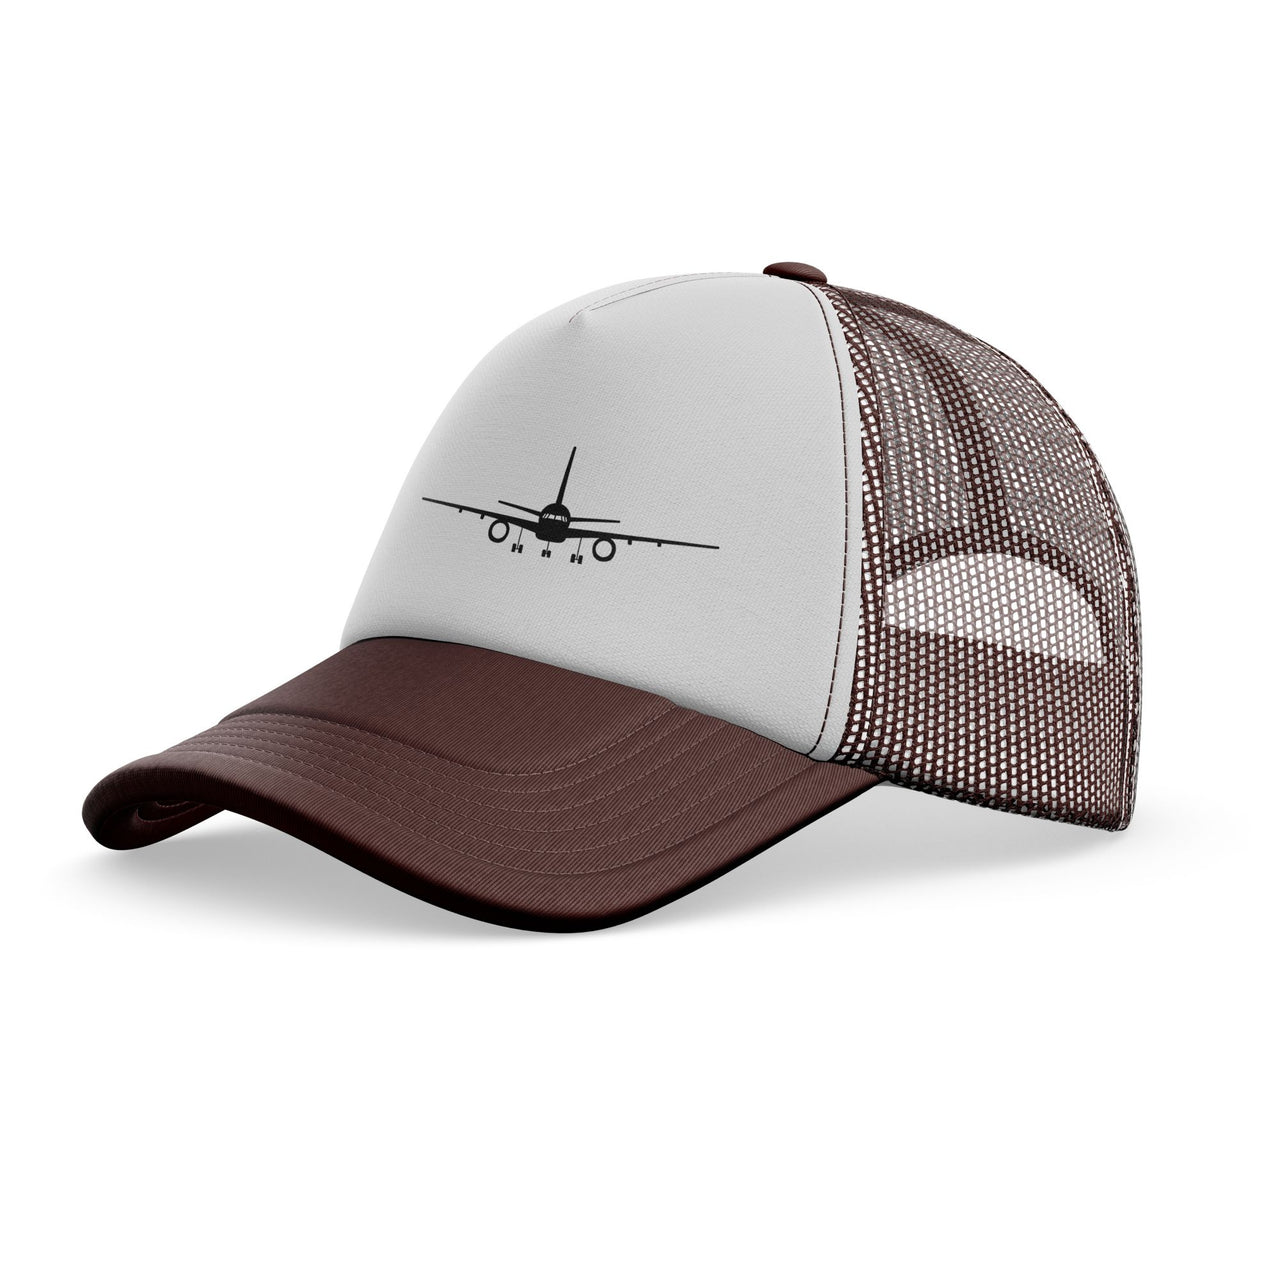 Boeing 757 Silhouette Designed Trucker Caps & Hats